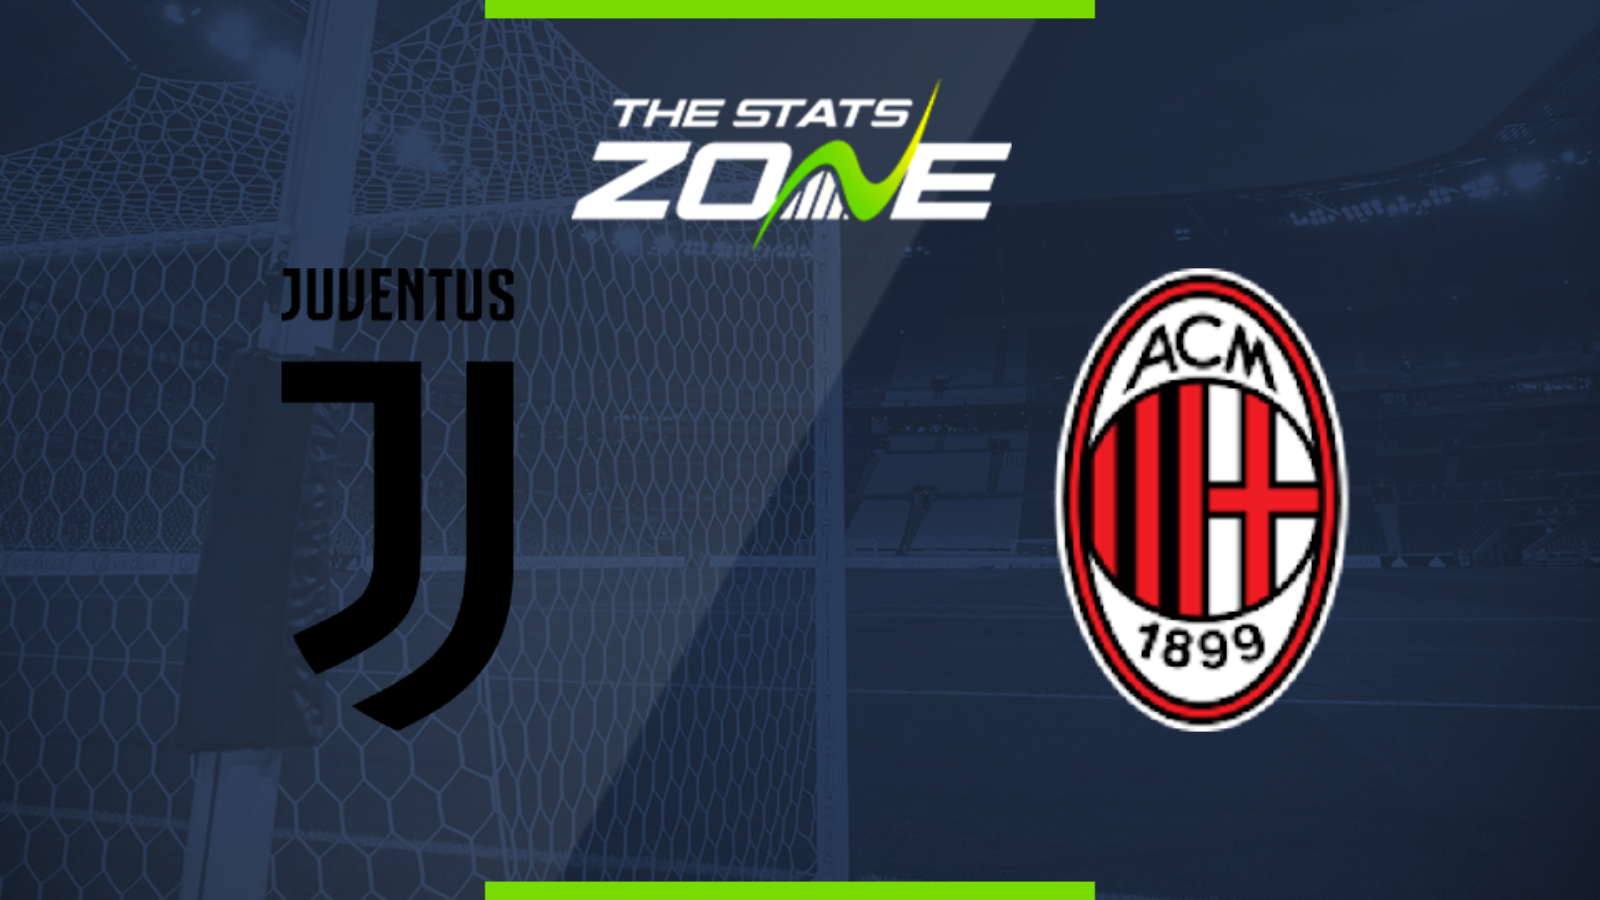 2019 20 Serie A Juventus Vs Ac Milan Preview Prediction